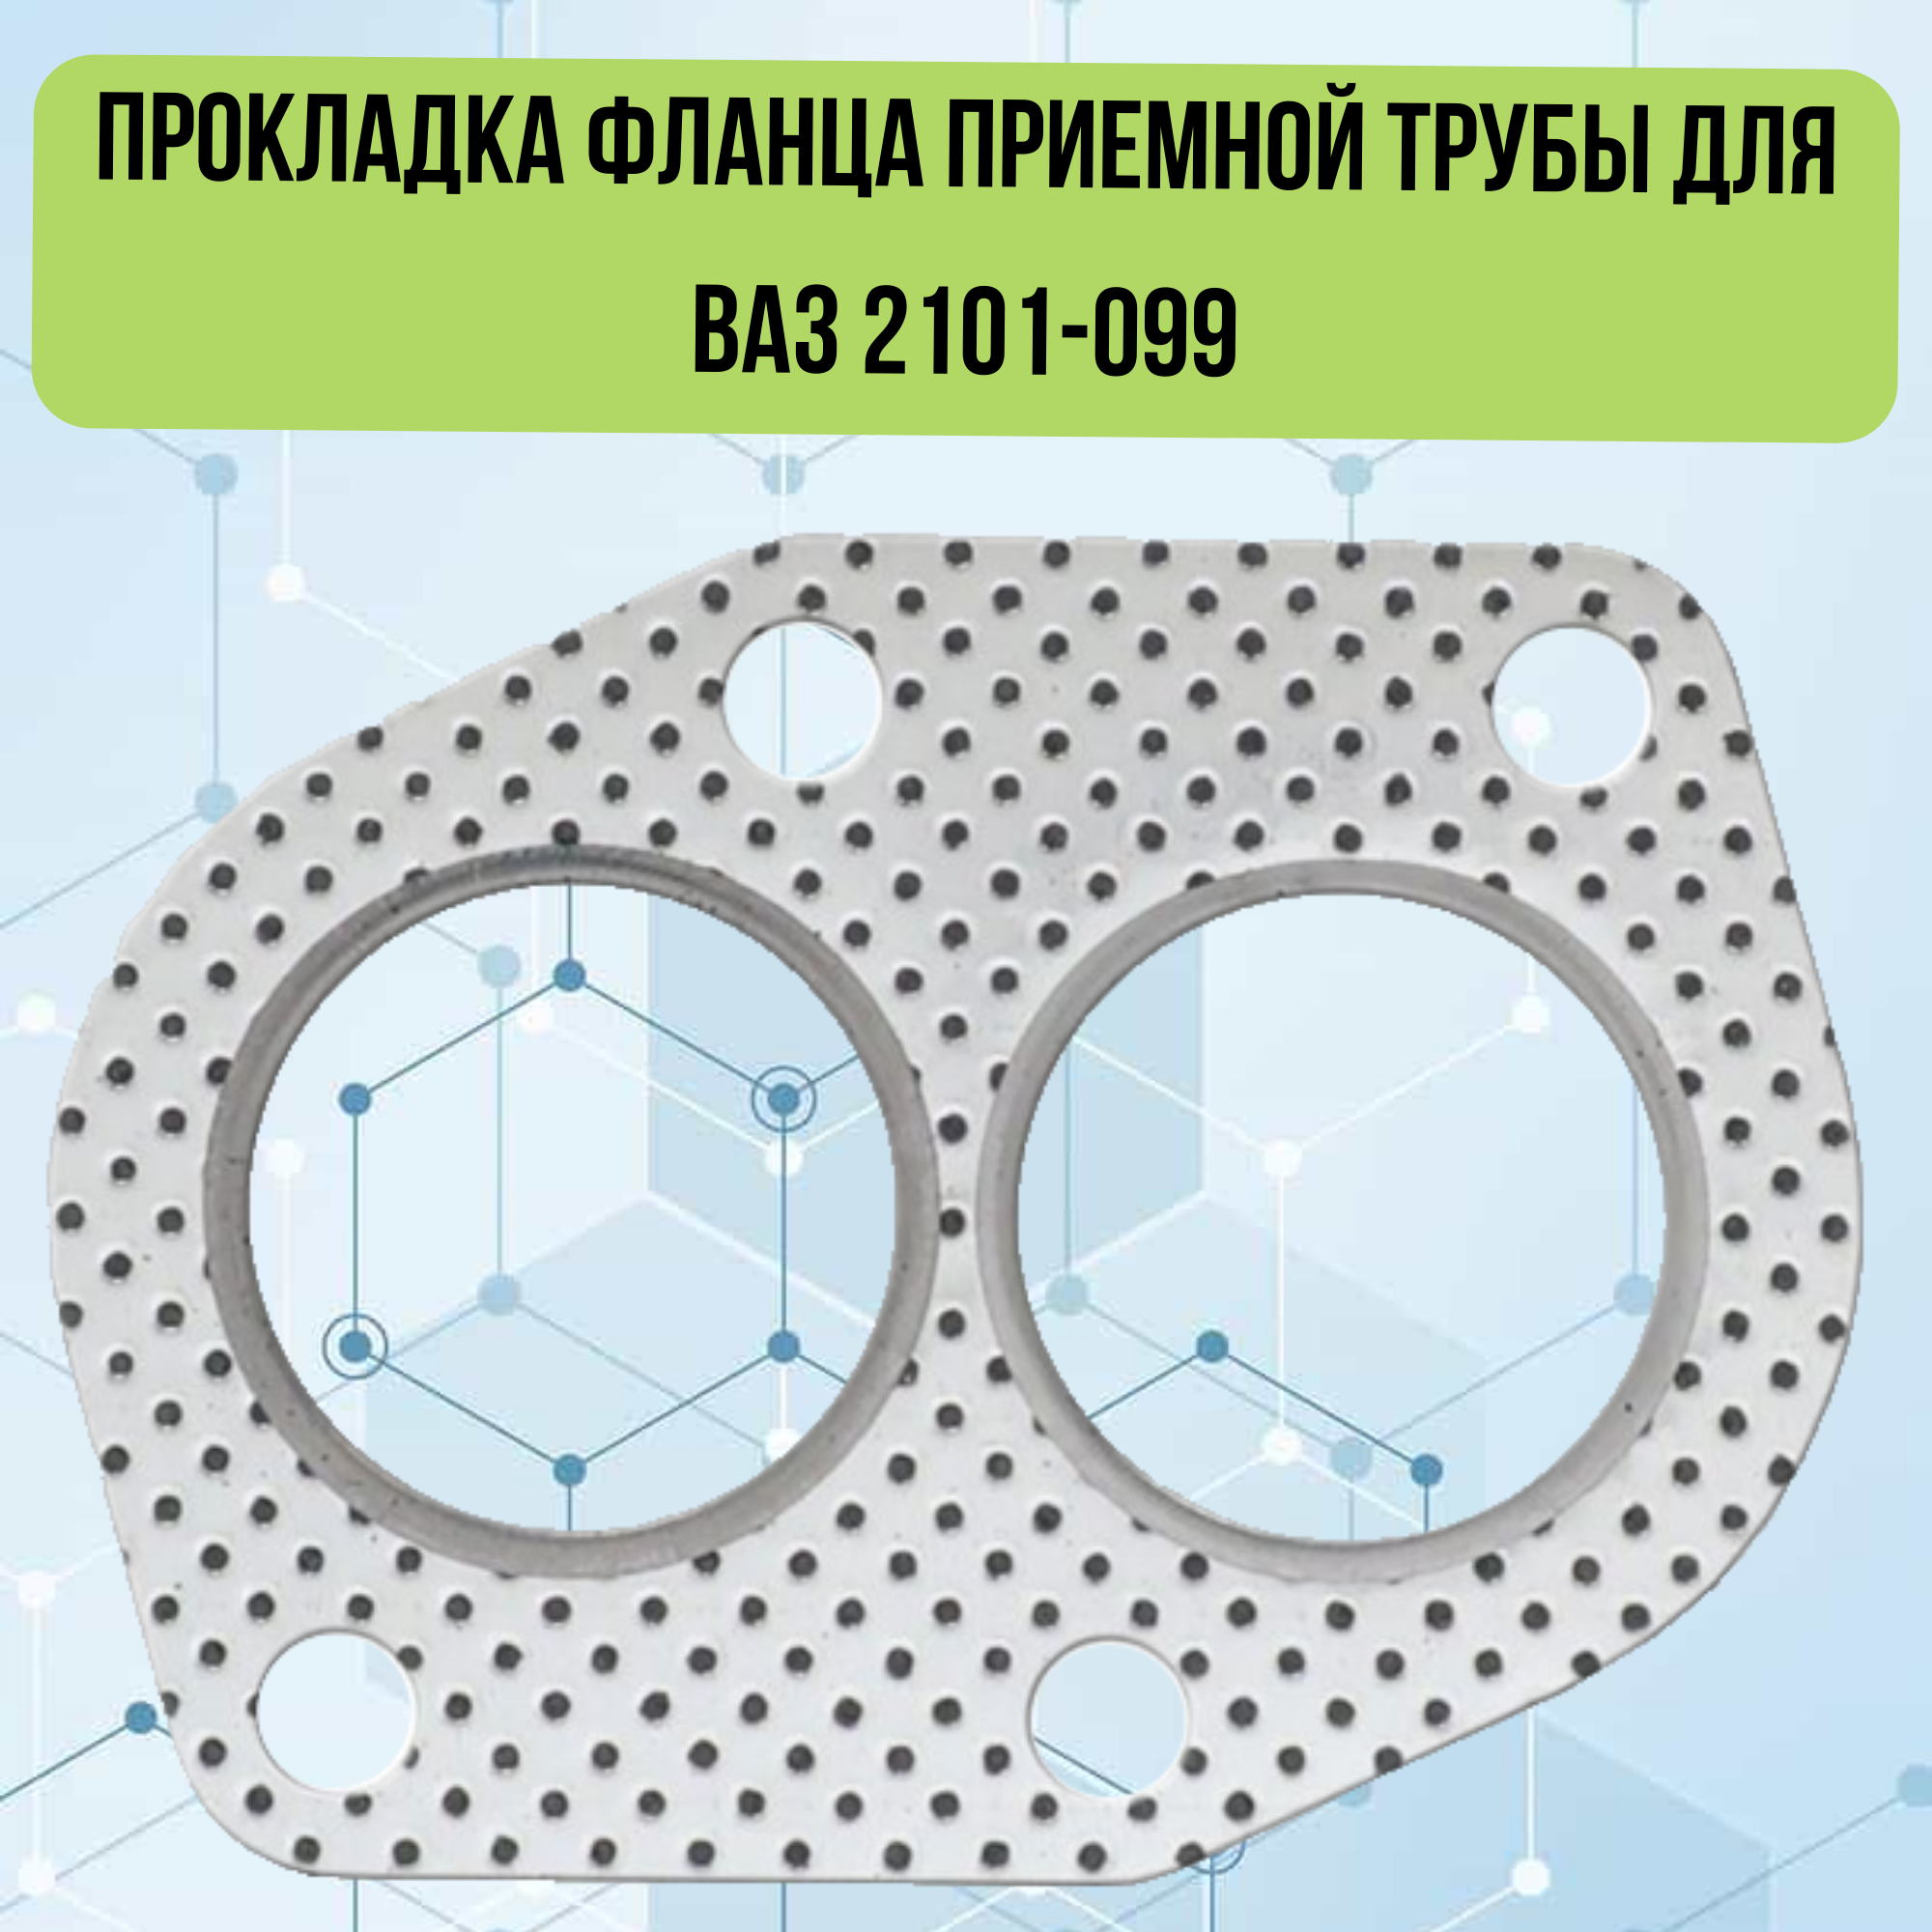 Прокладка фланца приемной трубы глушителя для ВАЗ 2101-099 KV-2103-1203020-103